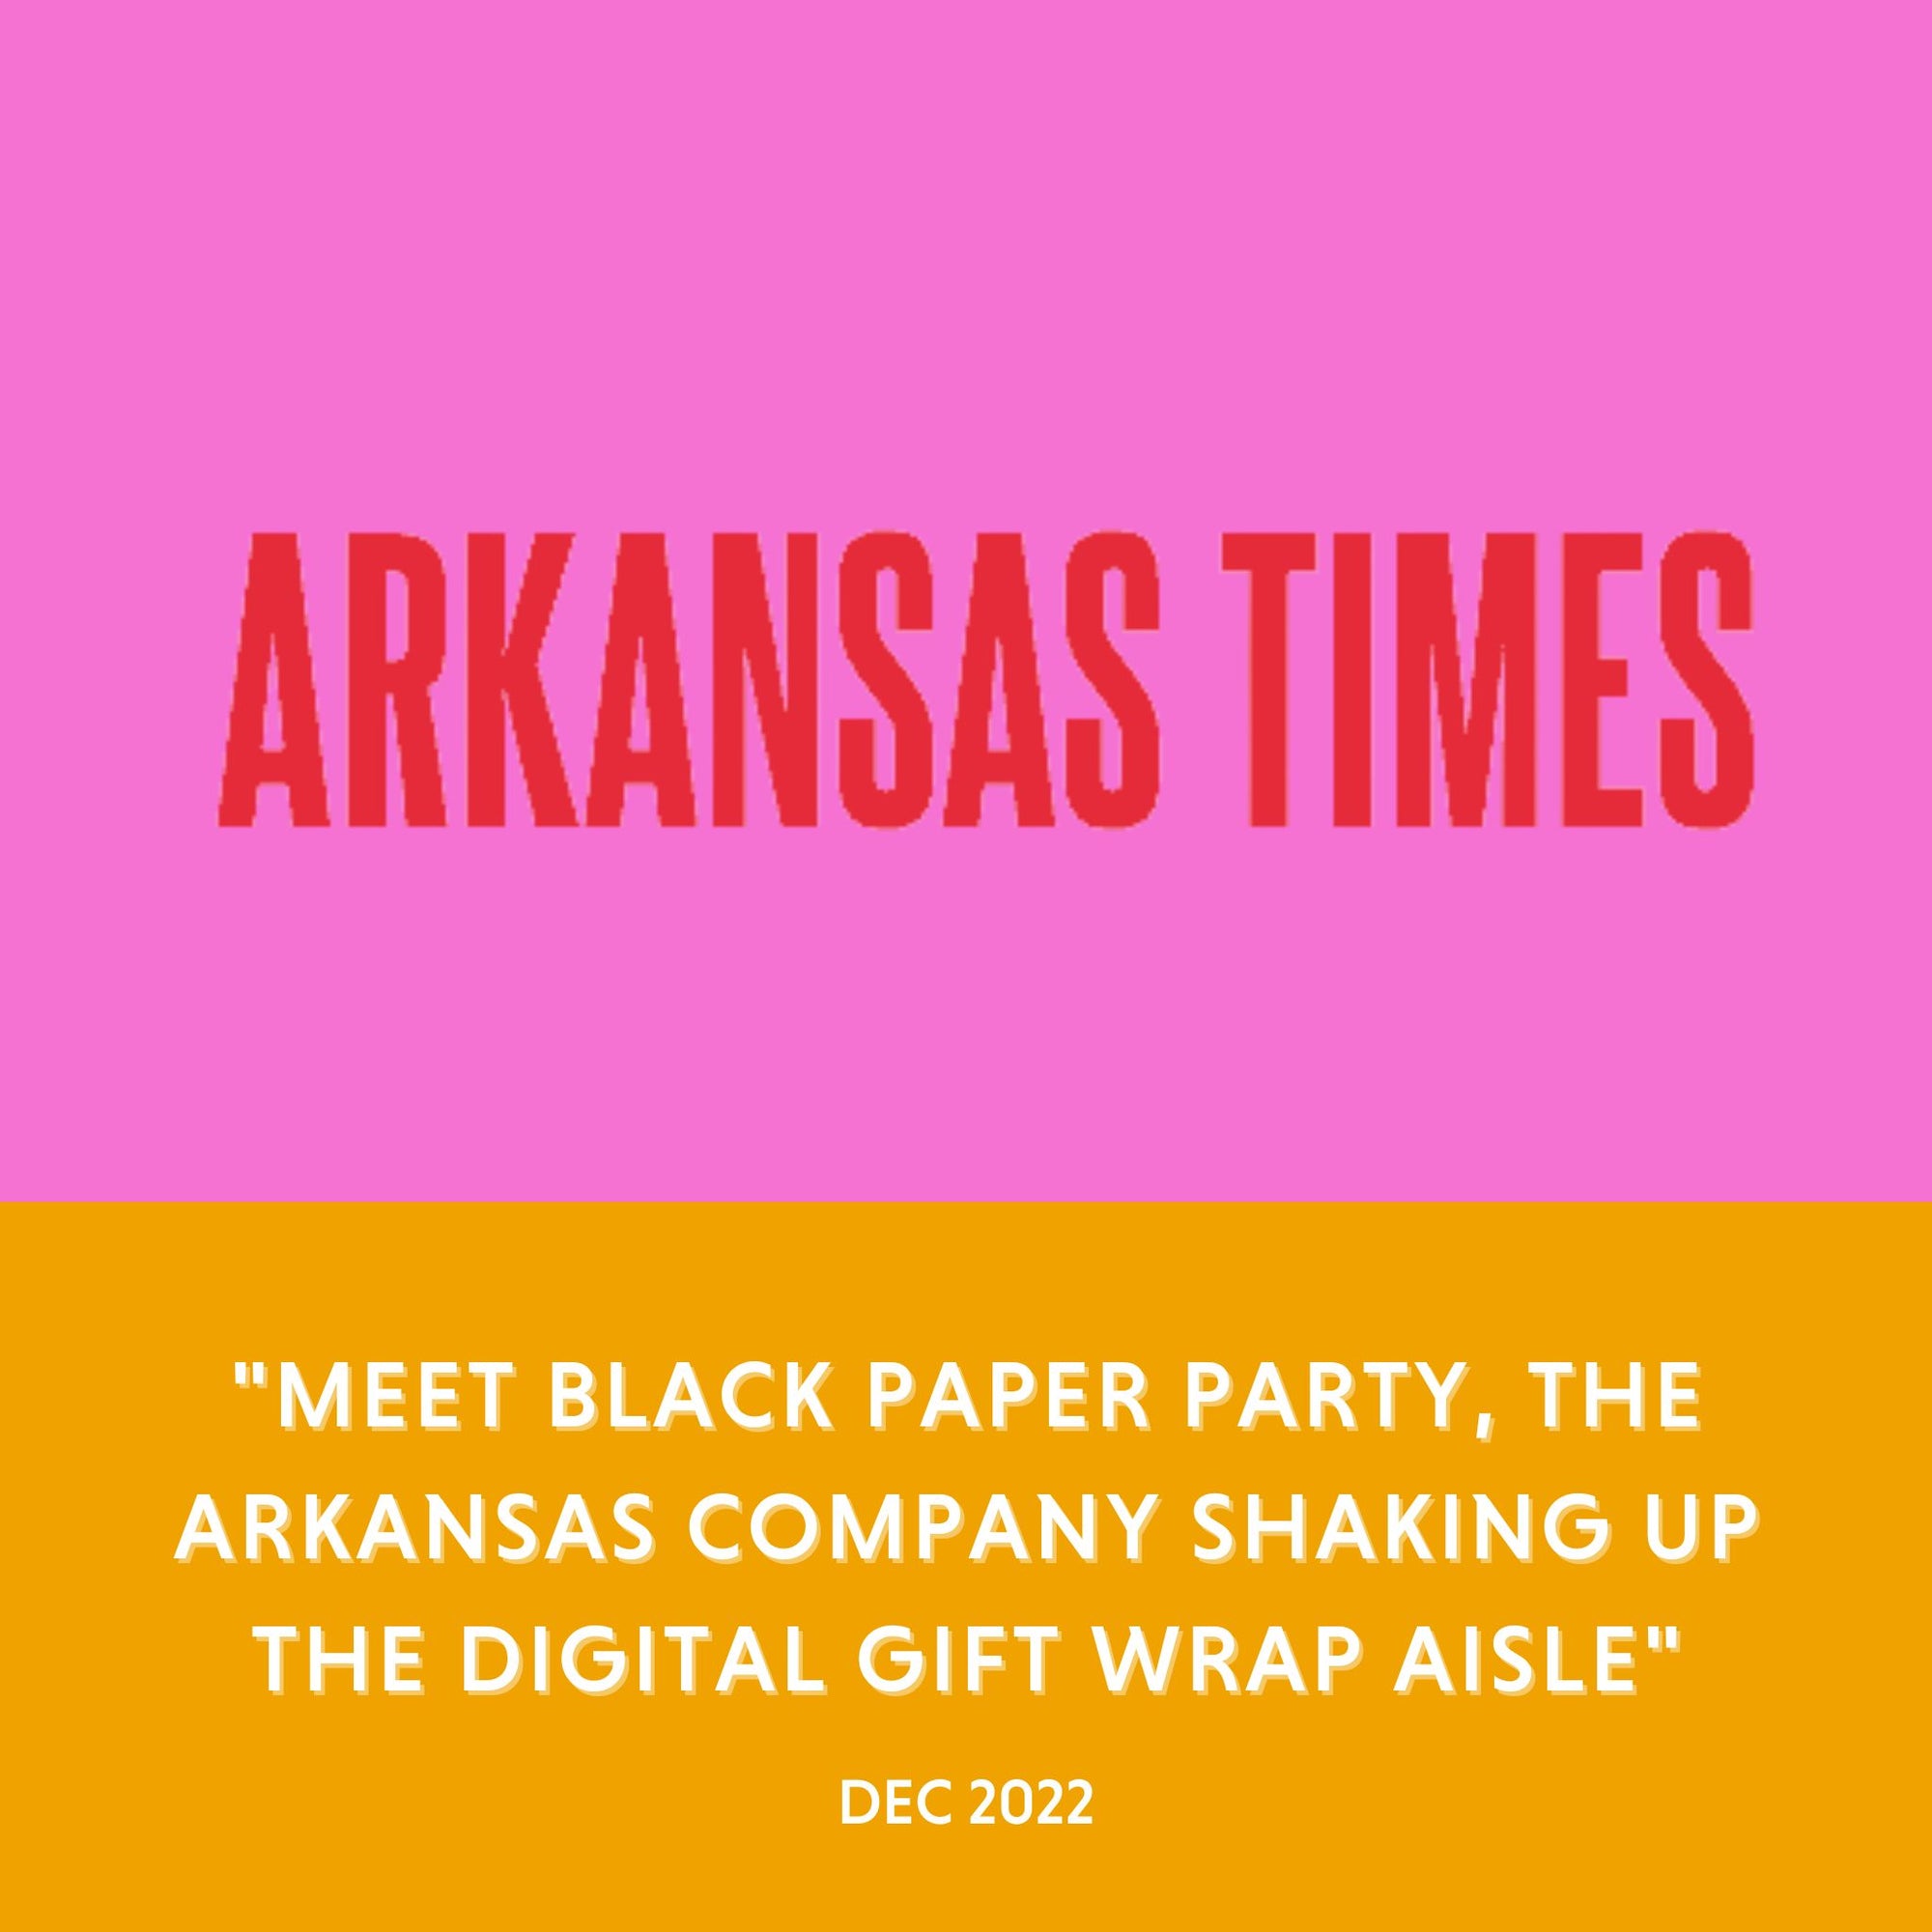 Arkansas Times - "Meet Black Paper Party, the Arkansas company shaking up the digital gift wrap aisle" - Dec 2022